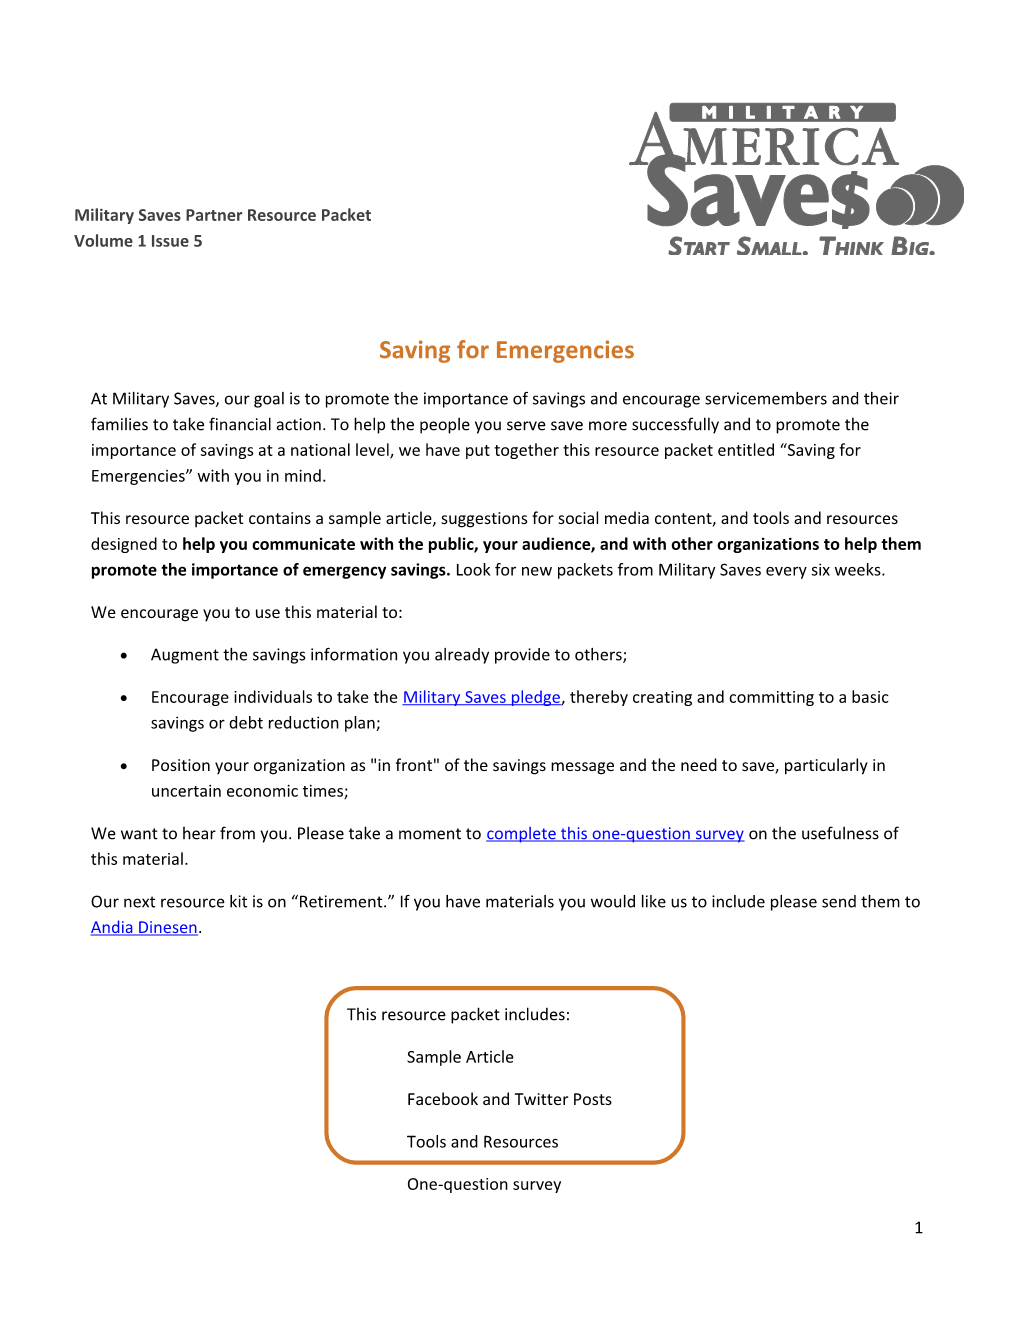 Saving for Emergencies